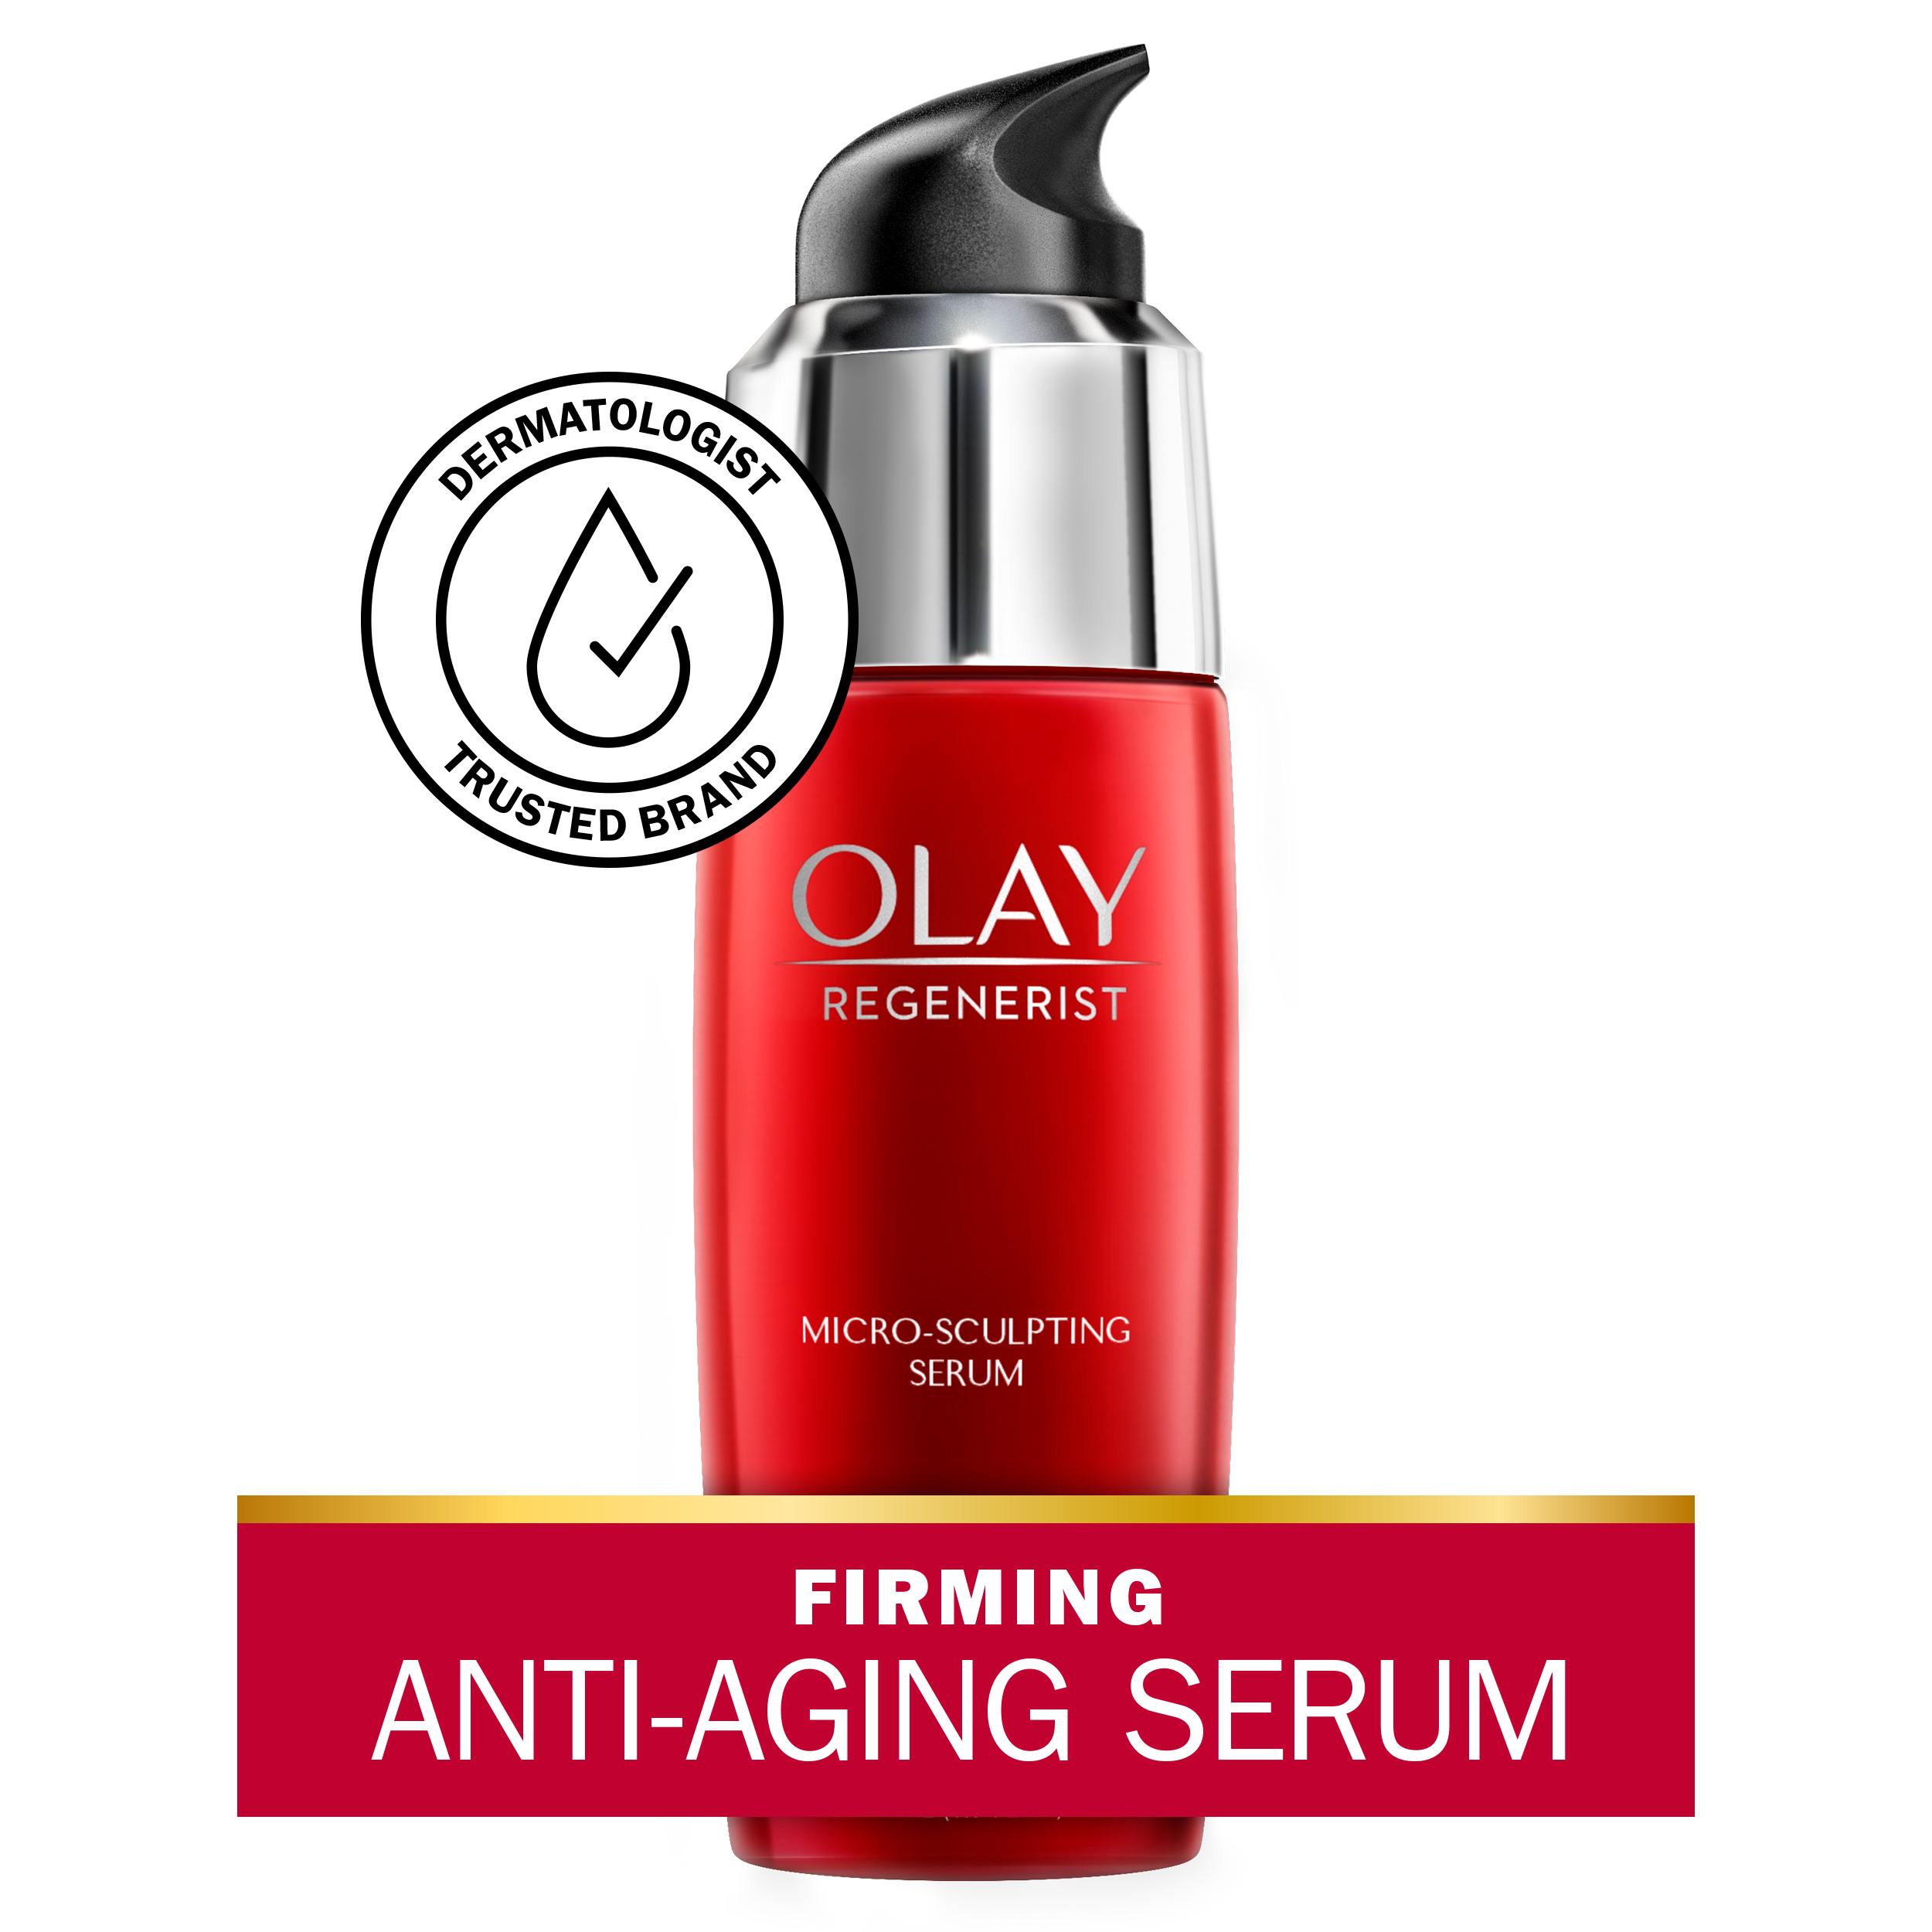 Olay Regenerist Micro-Sculpting Serum, Face Moisturizer, Reduces Fine Lines & Wrinkles, All Skin, 1.7 fl oz - image 1 of 14